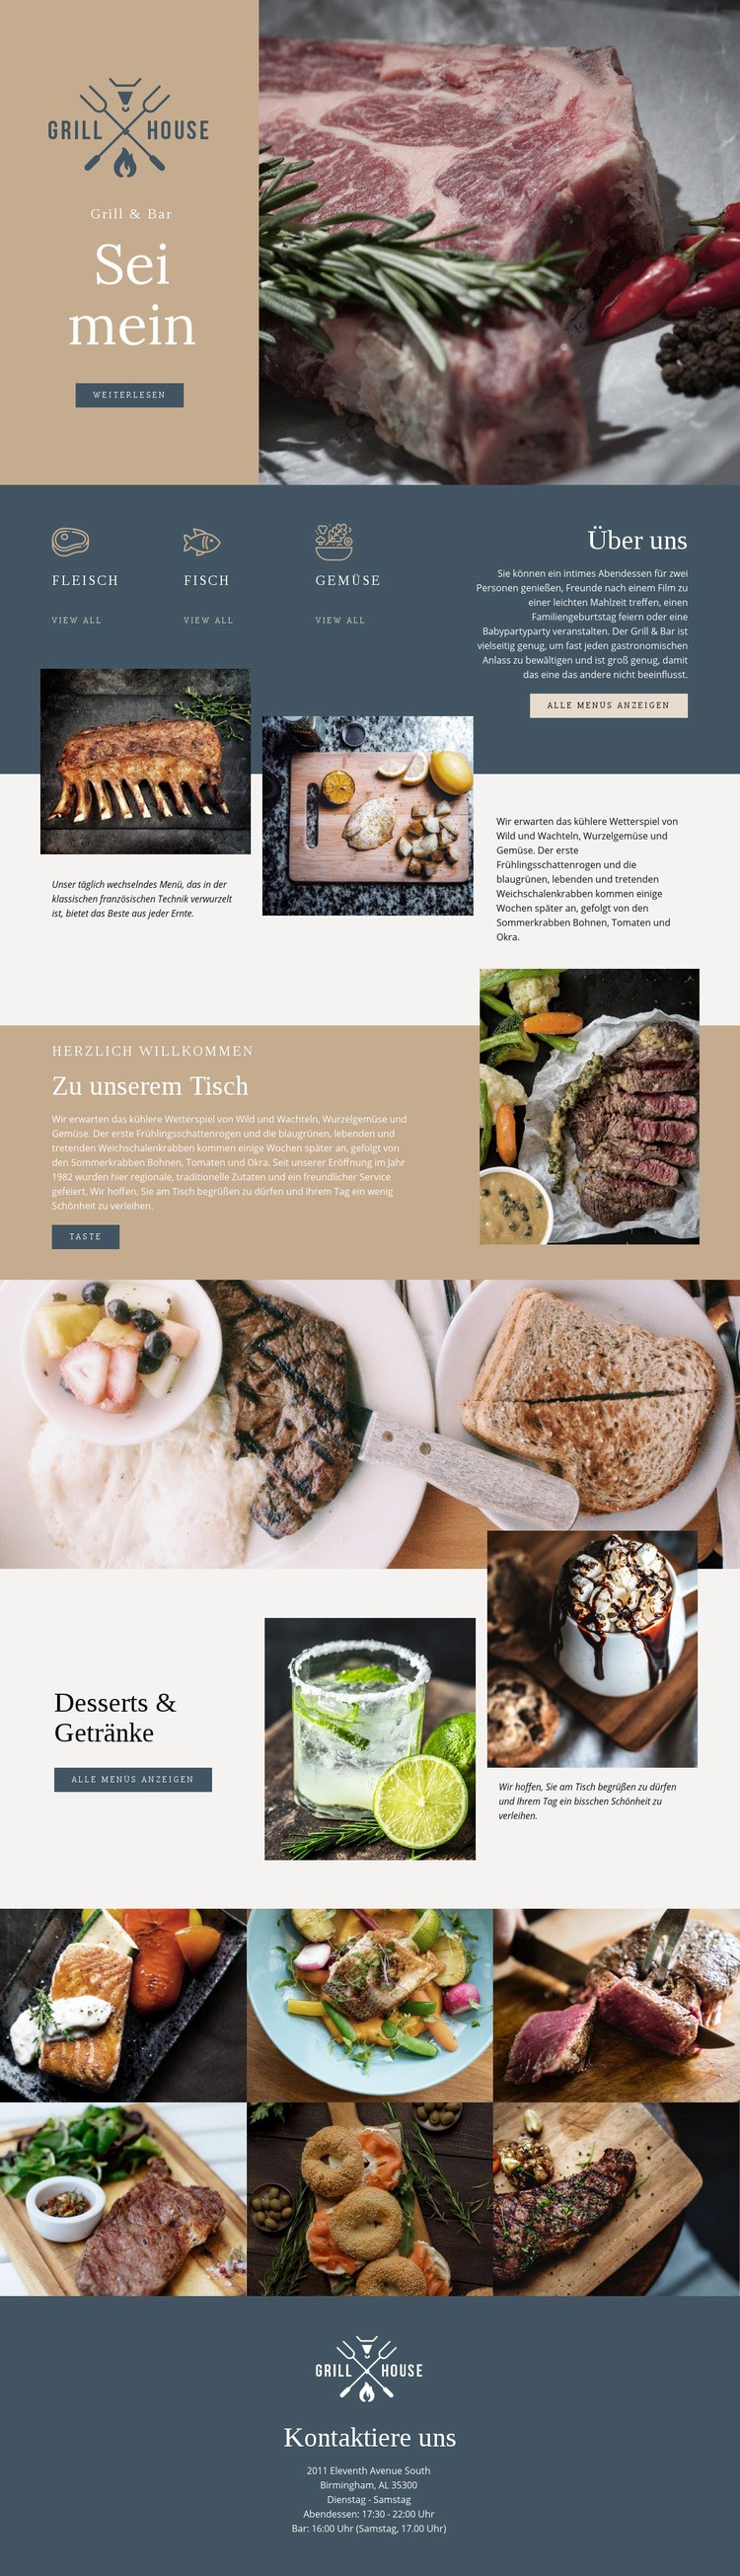 Feinstes Grillhaus Restaurant Website-Modell